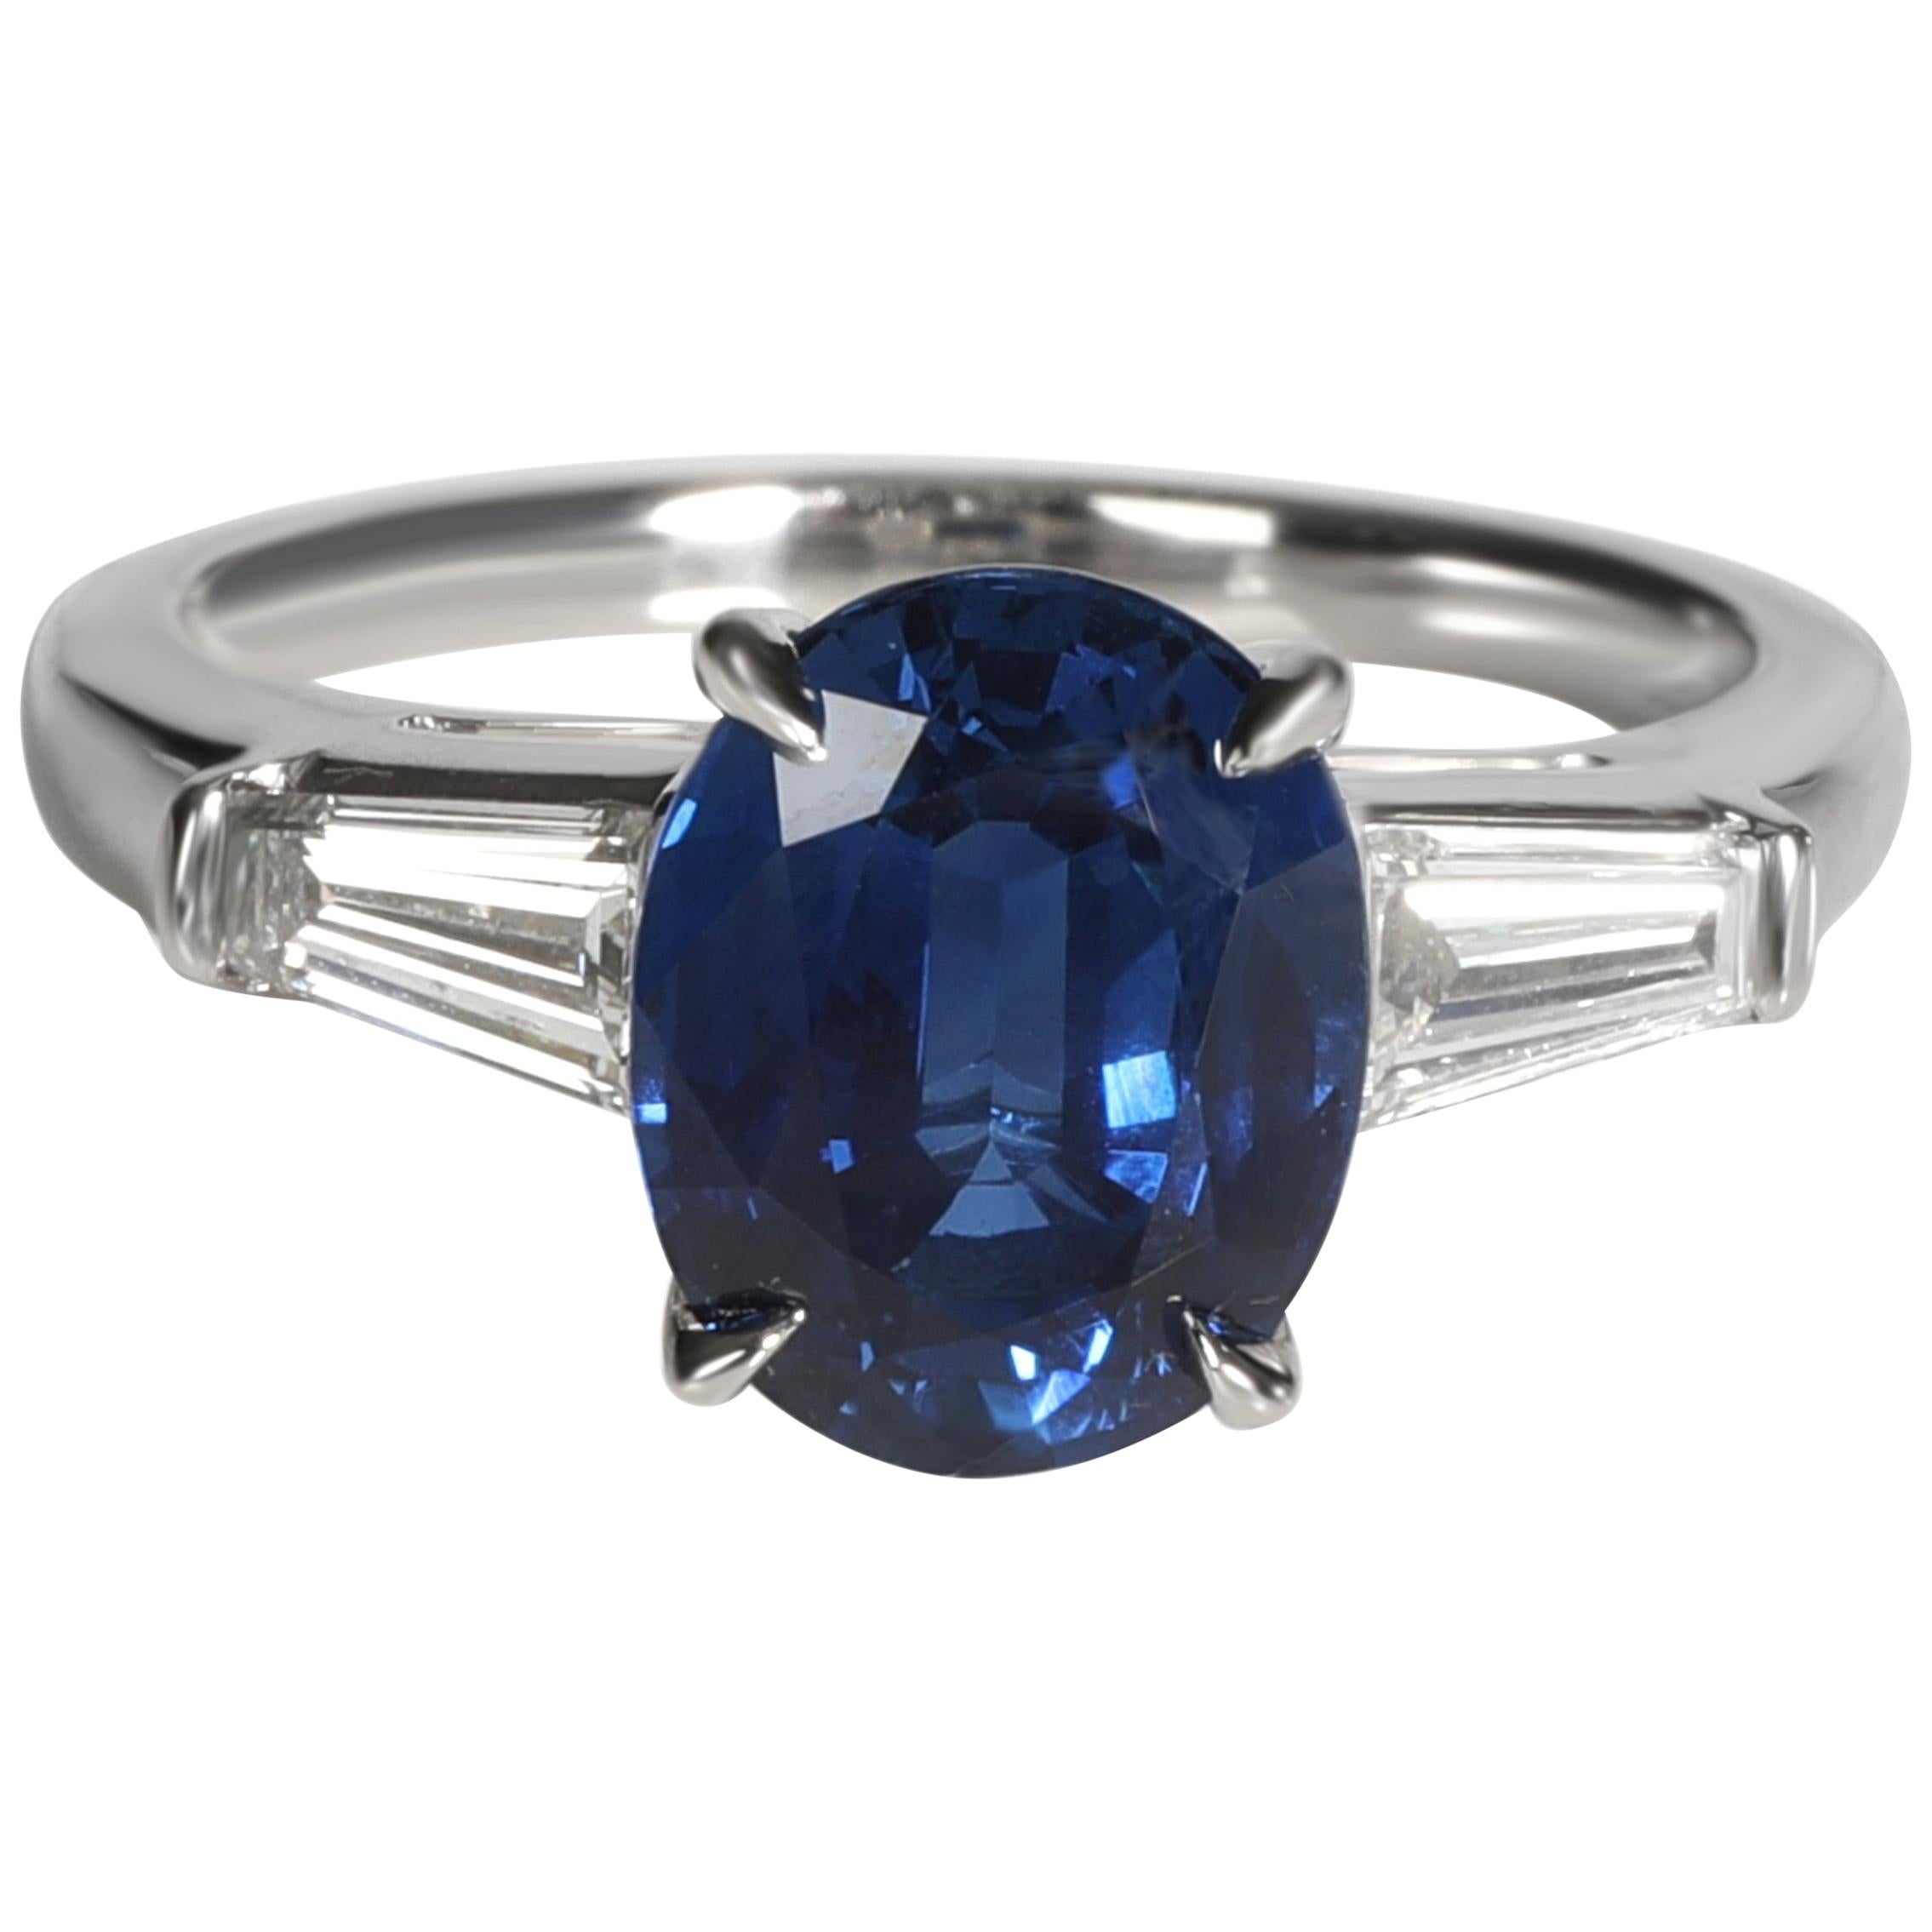 Tiffany & Co. Three-Stone Sapphire and Diamond Ring in Platinum 0.50 Carat